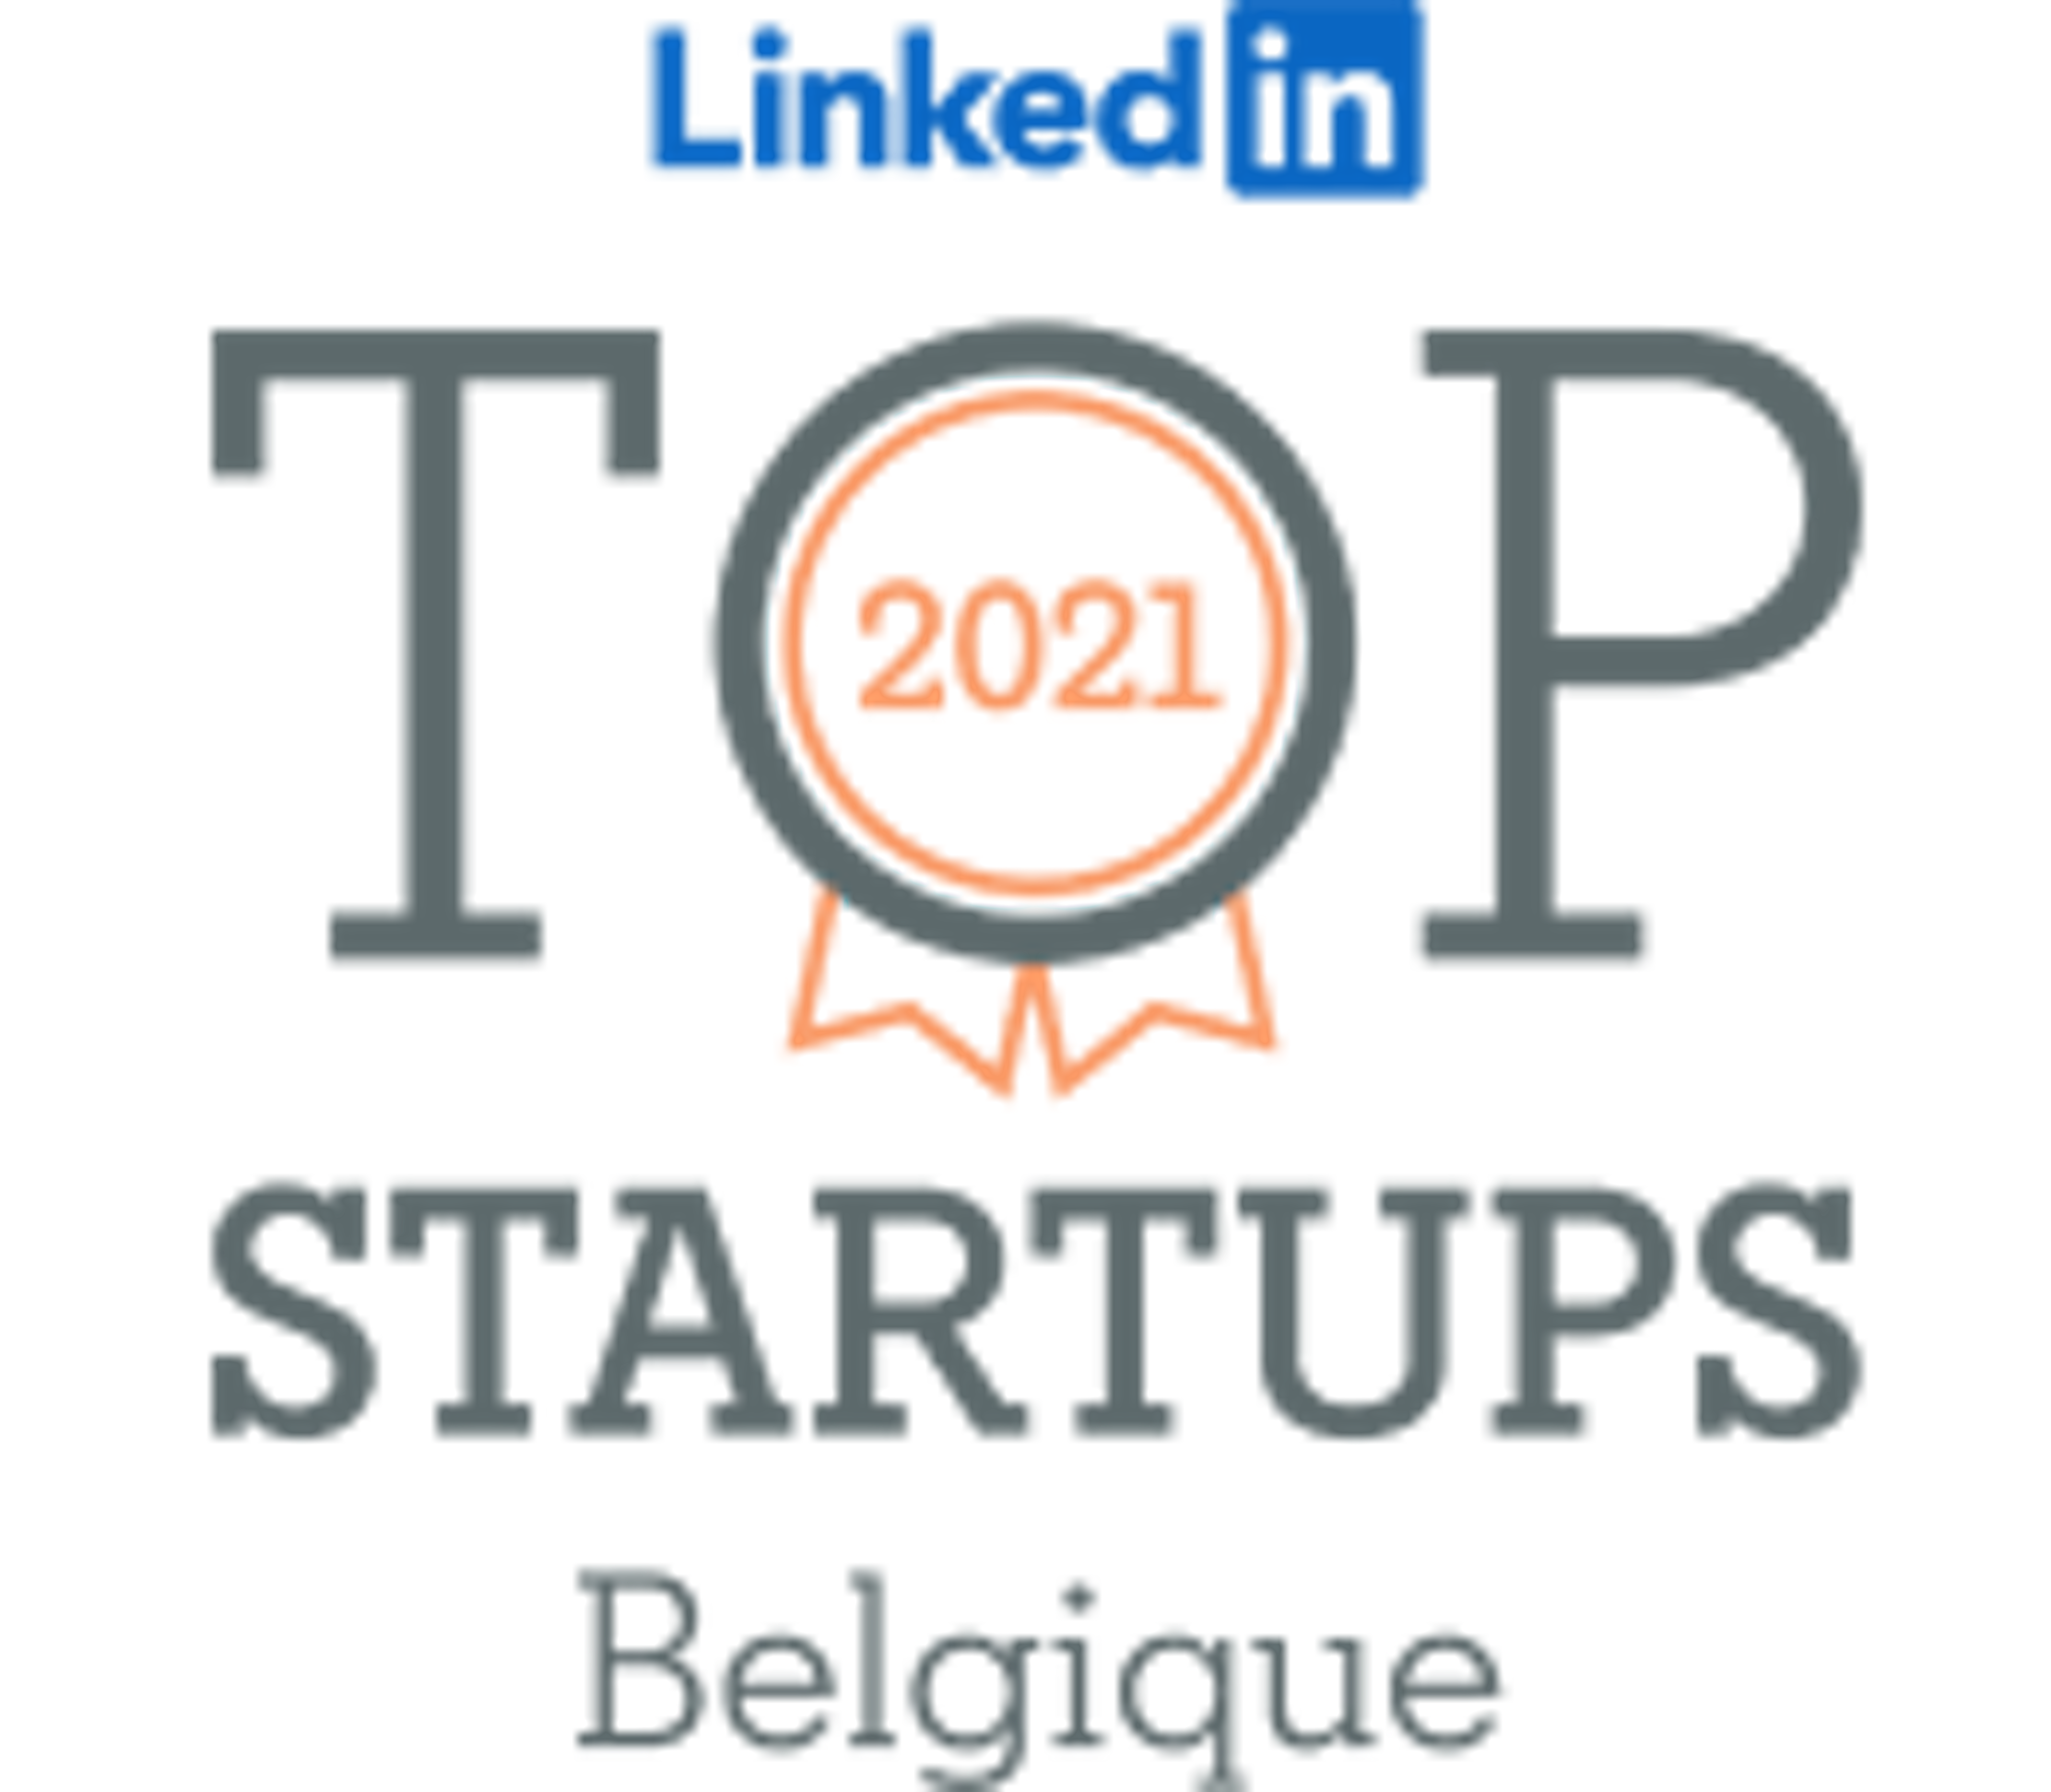 Logo de LinkedIn TOP Startups Belgique